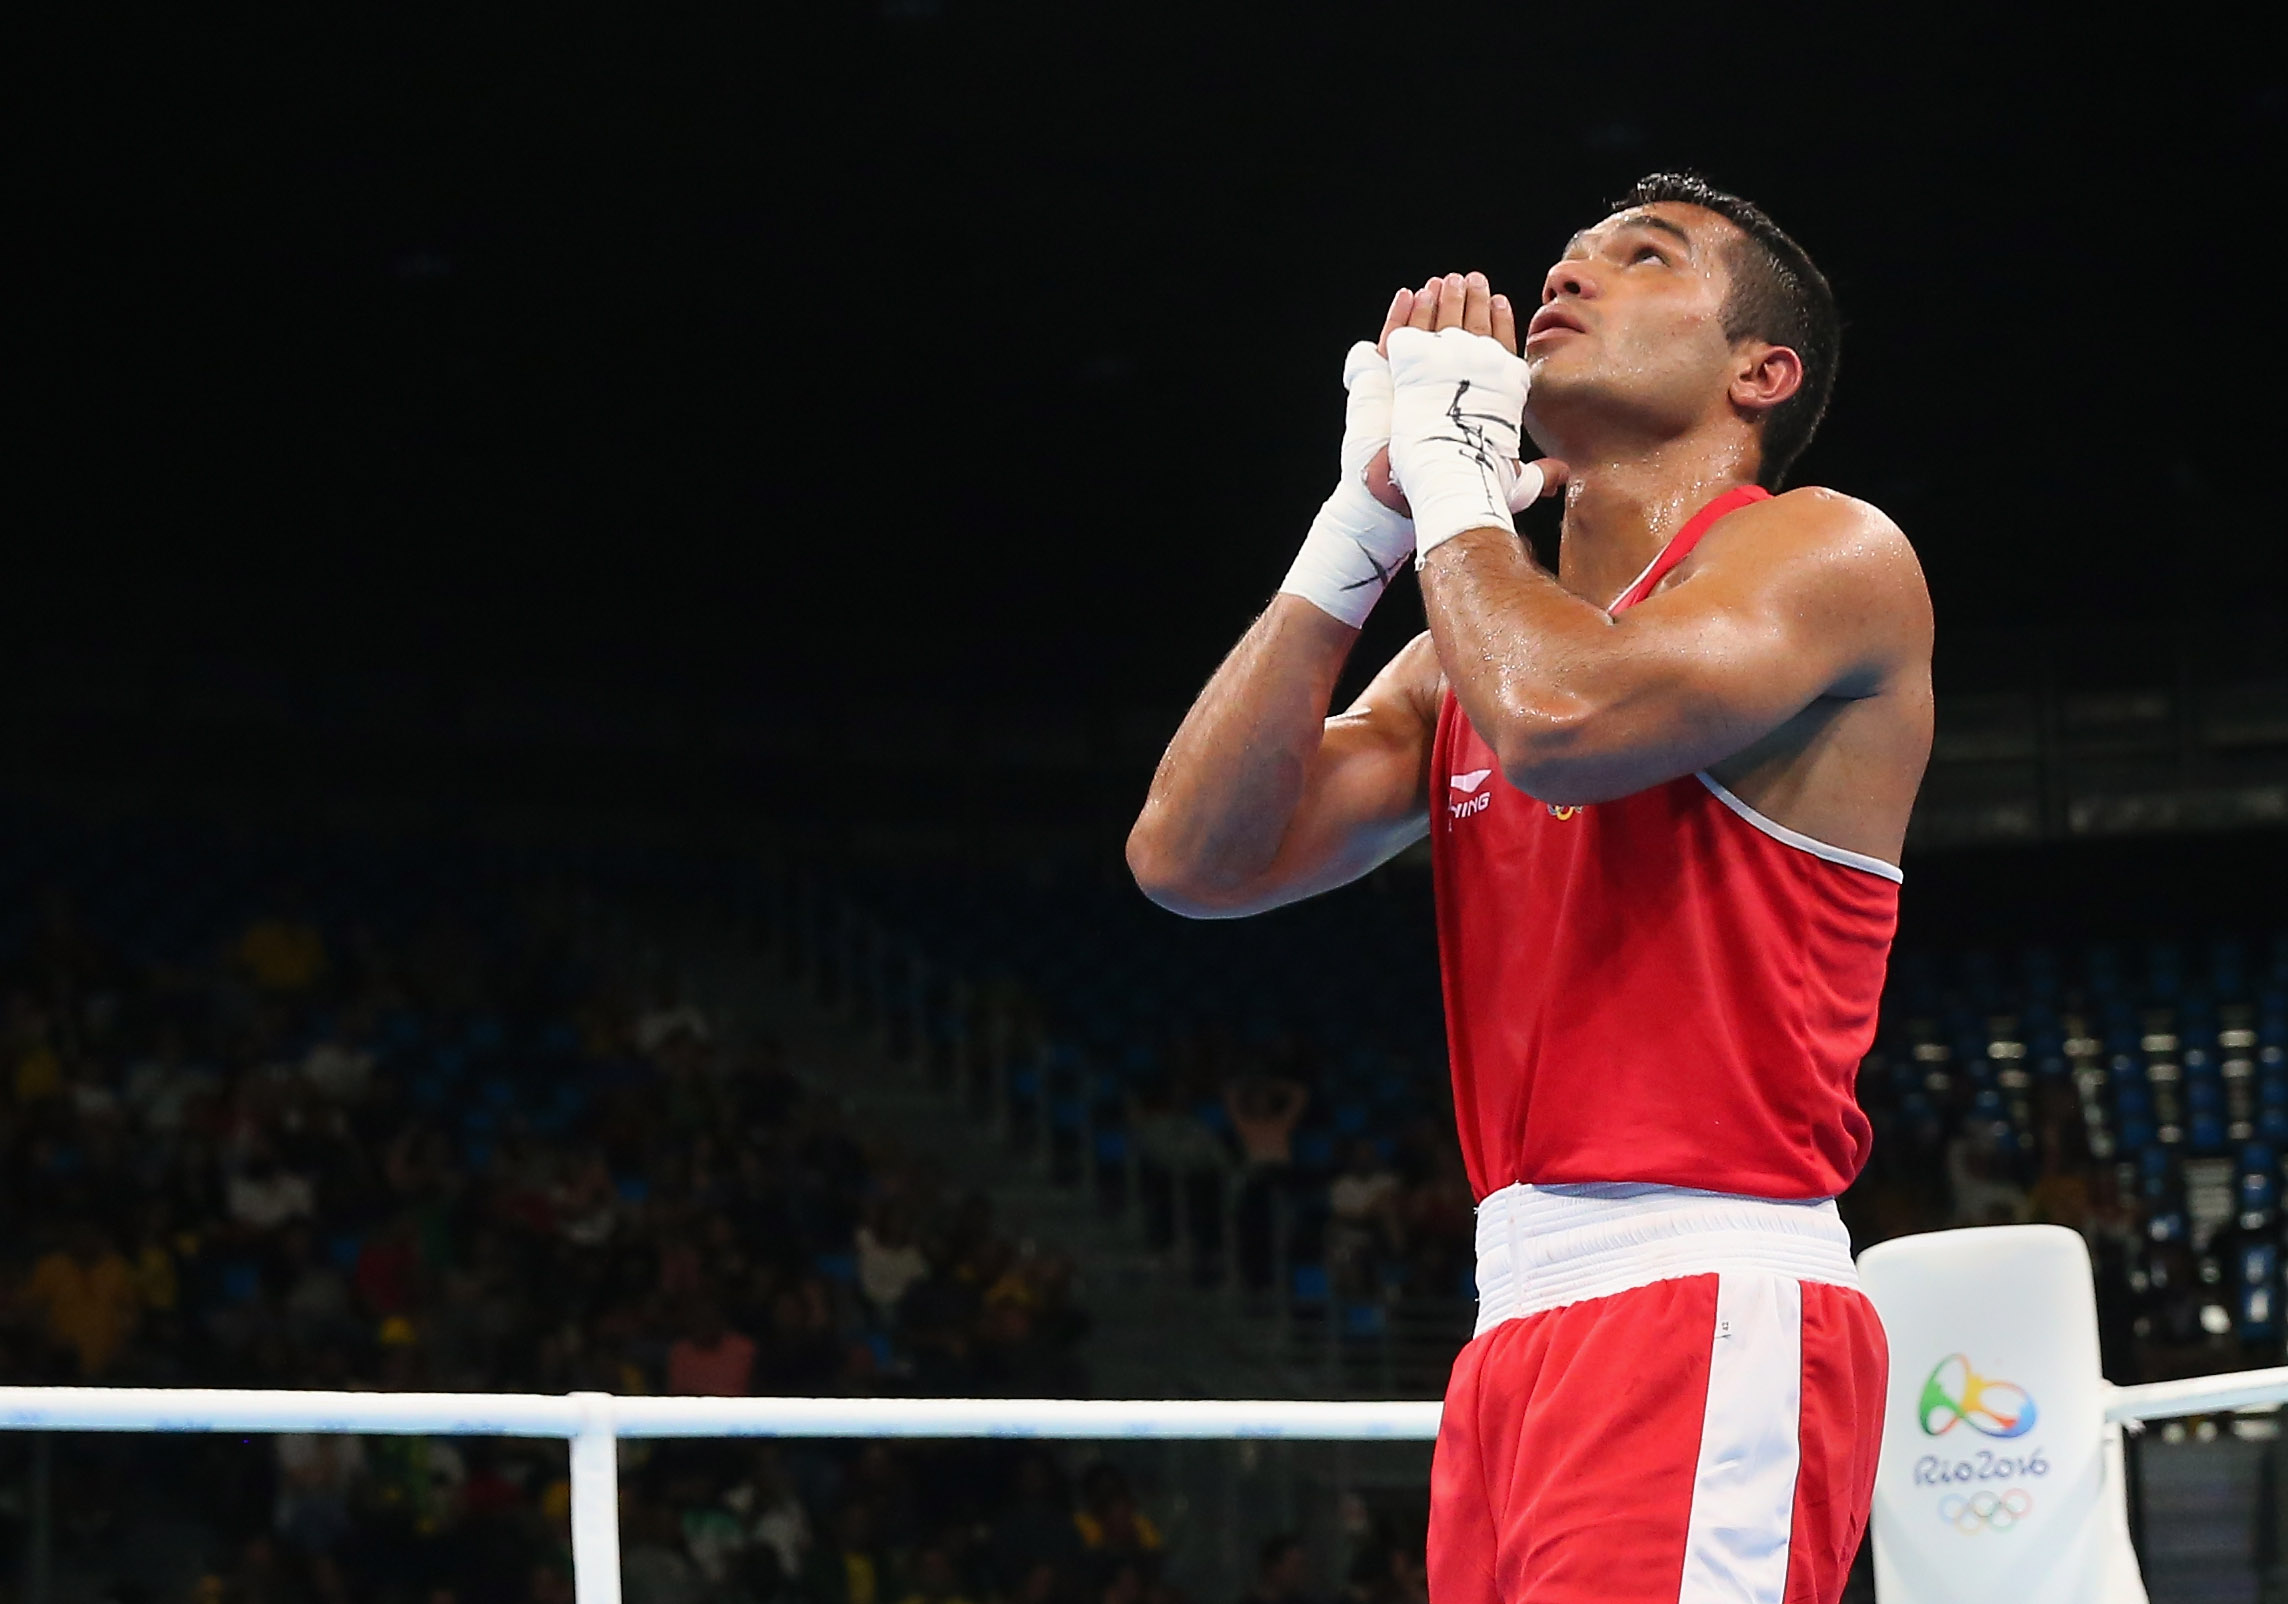 Boxing | Vikas Krishan wins his debut match as professional boxer